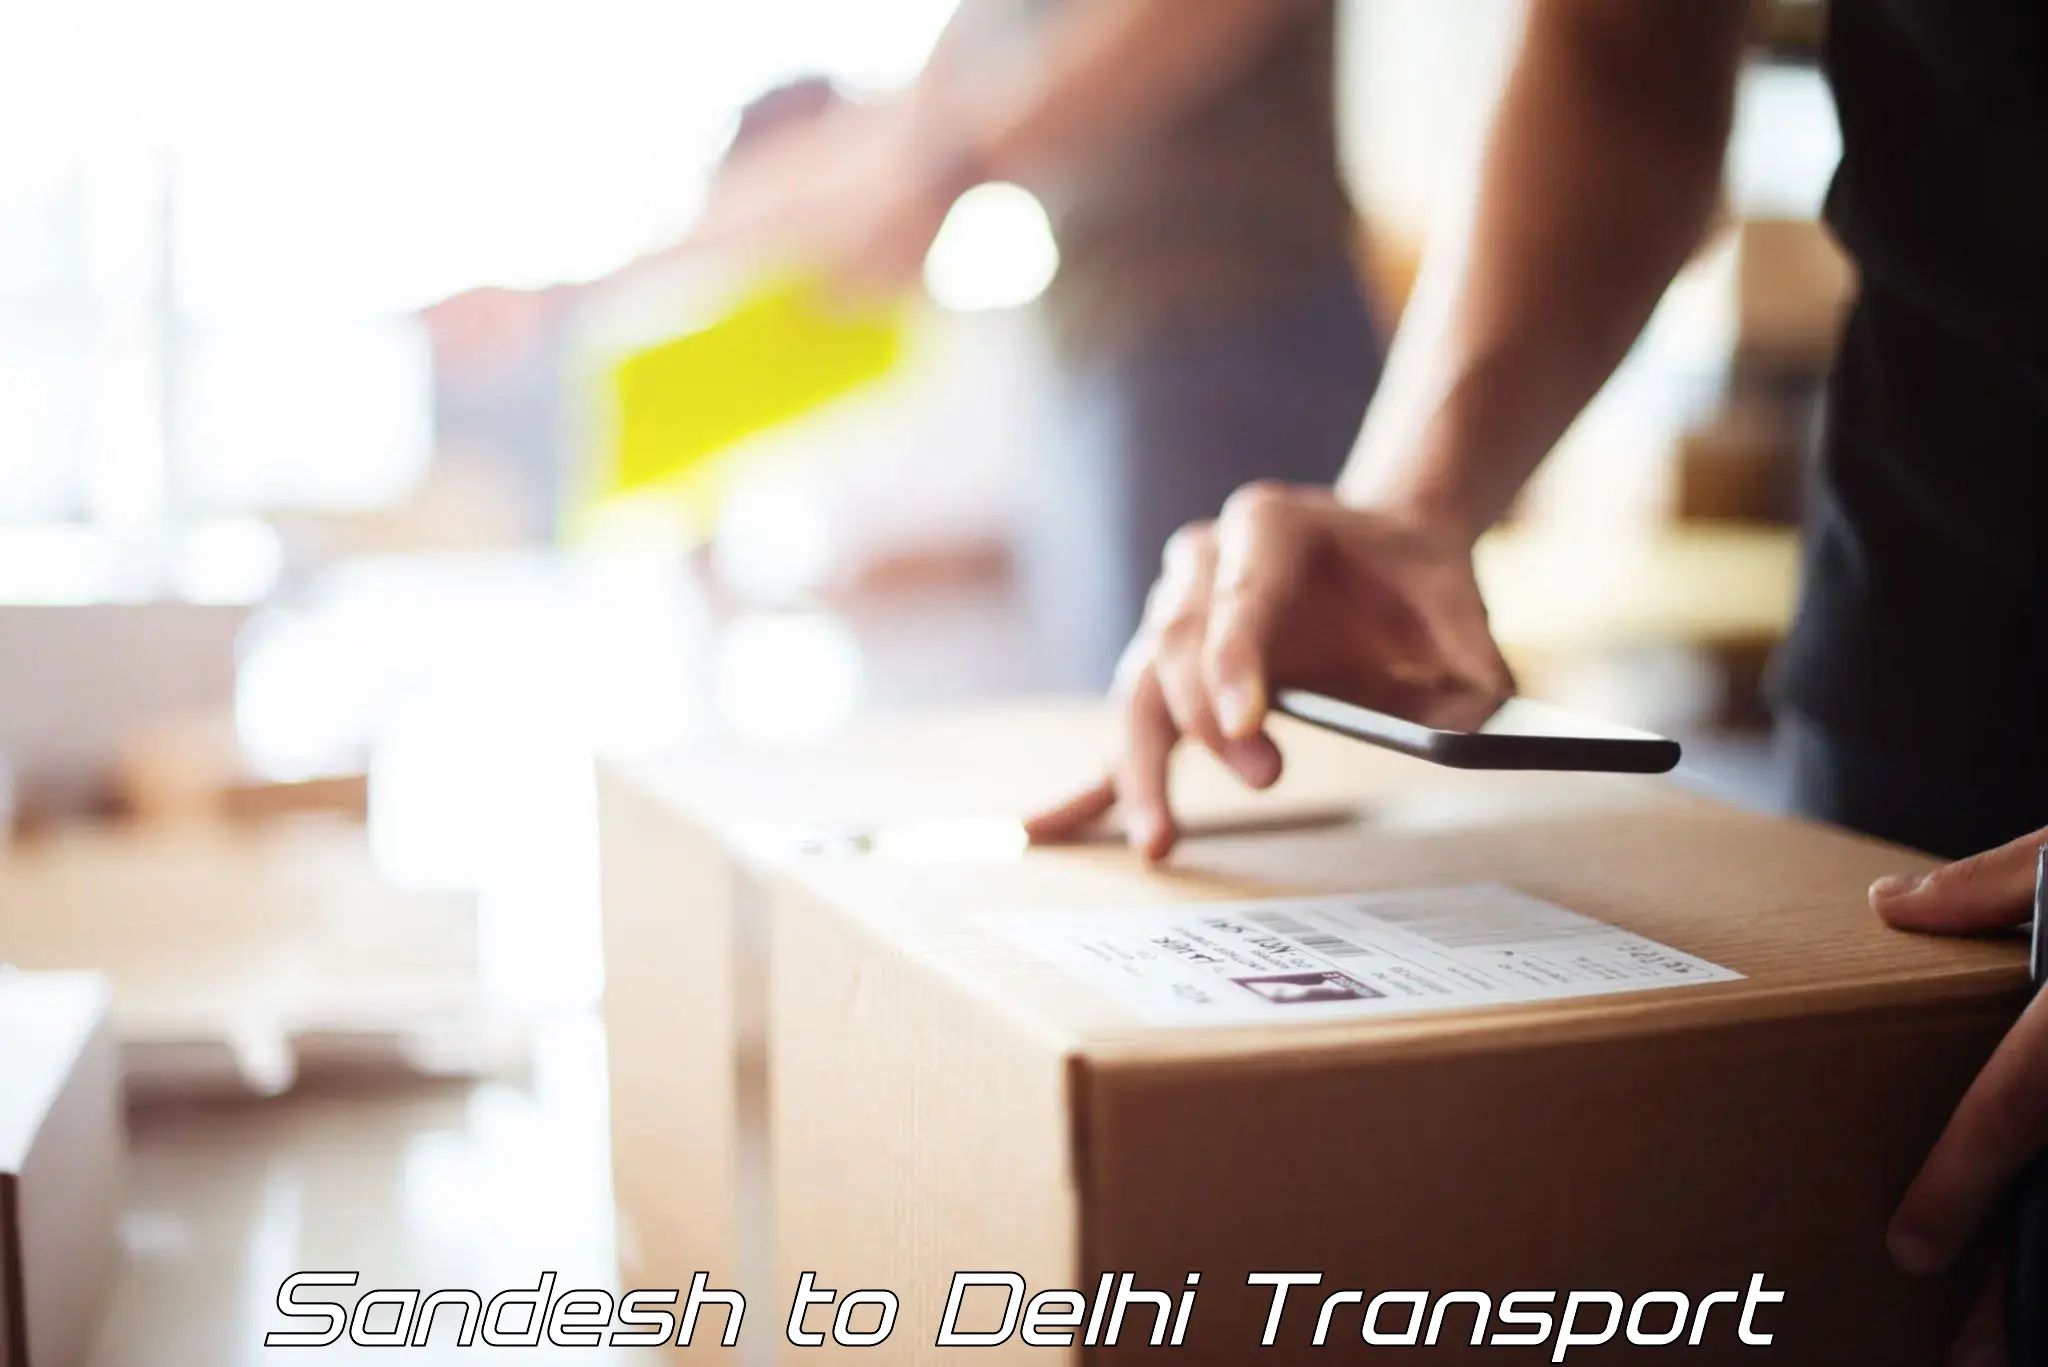 Bike shipping service Sandesh to University of Delhi